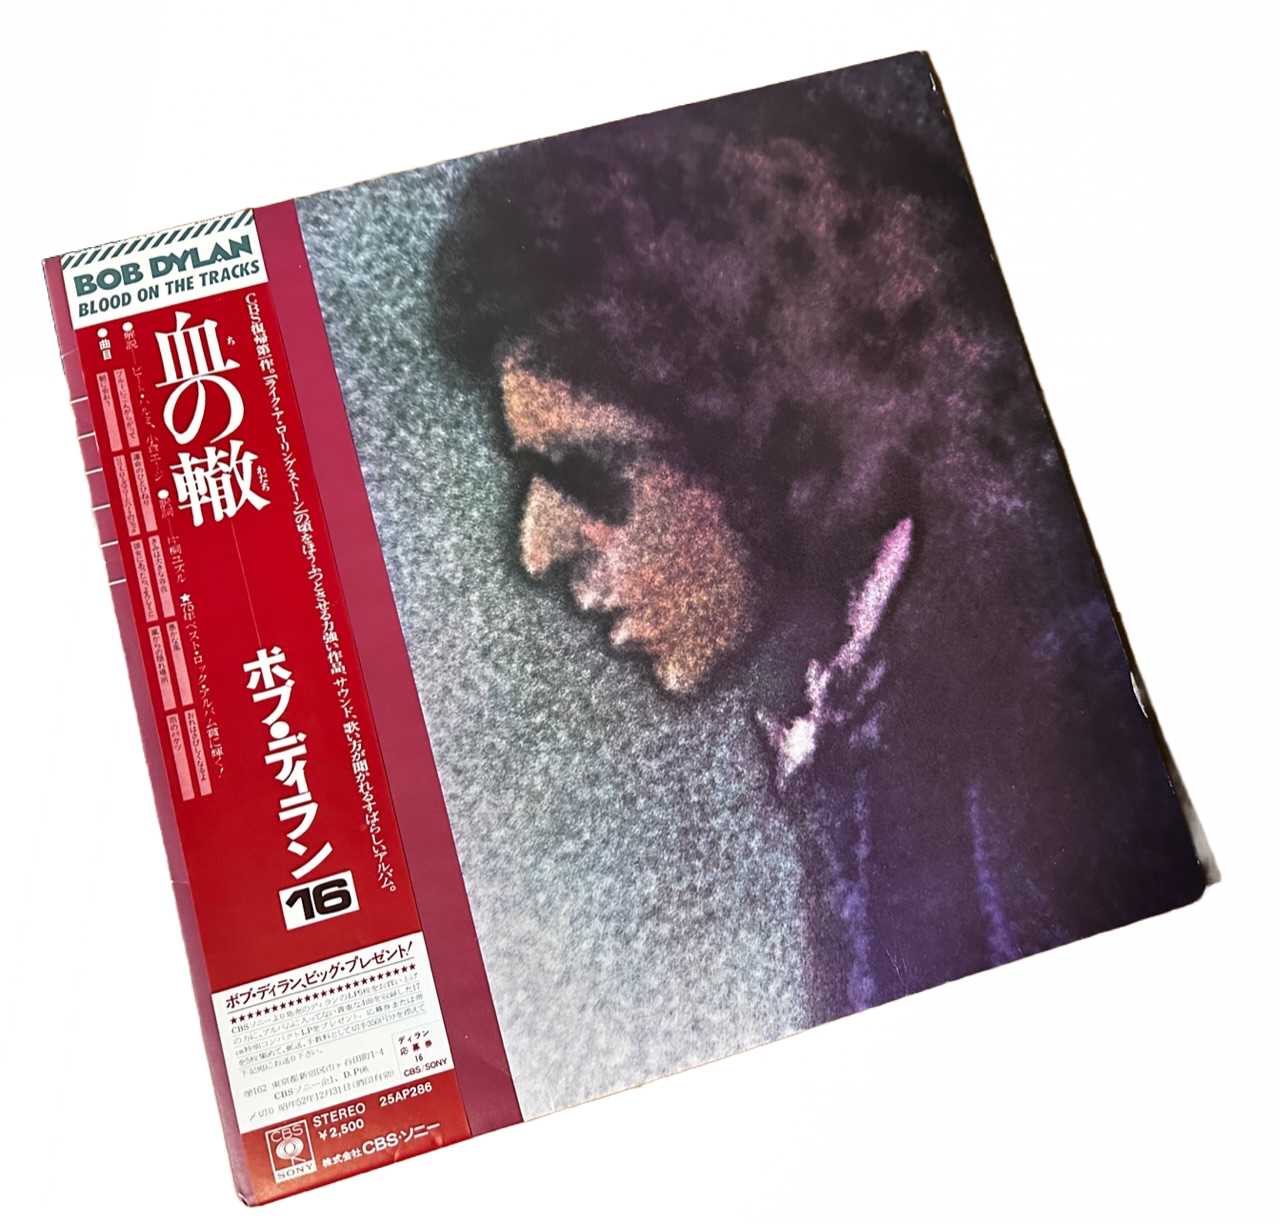 Bob Dylan - Blood On The Tracks [Japanese Vinyl]